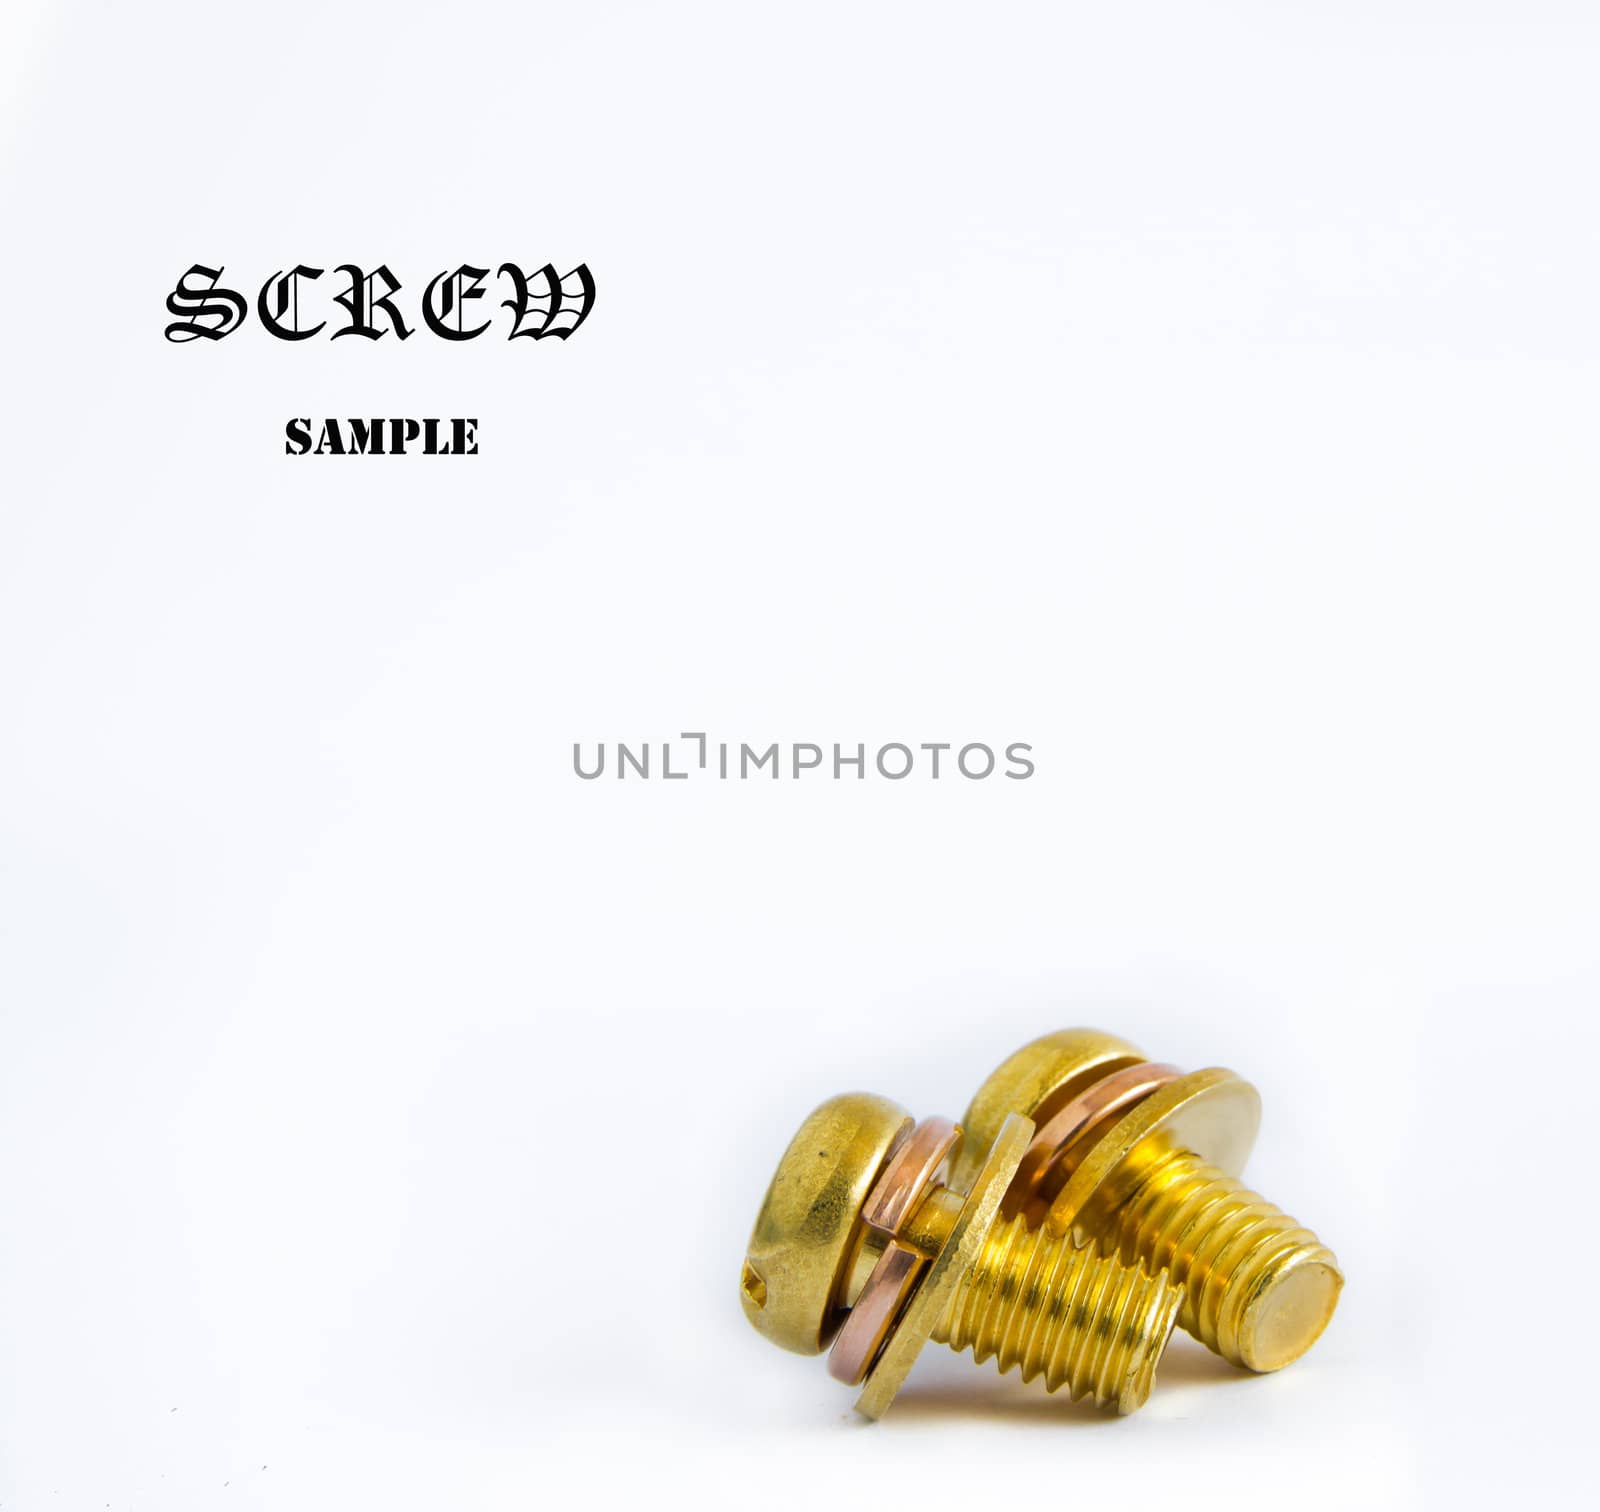 macro of one brass screw by wasan_gredpree